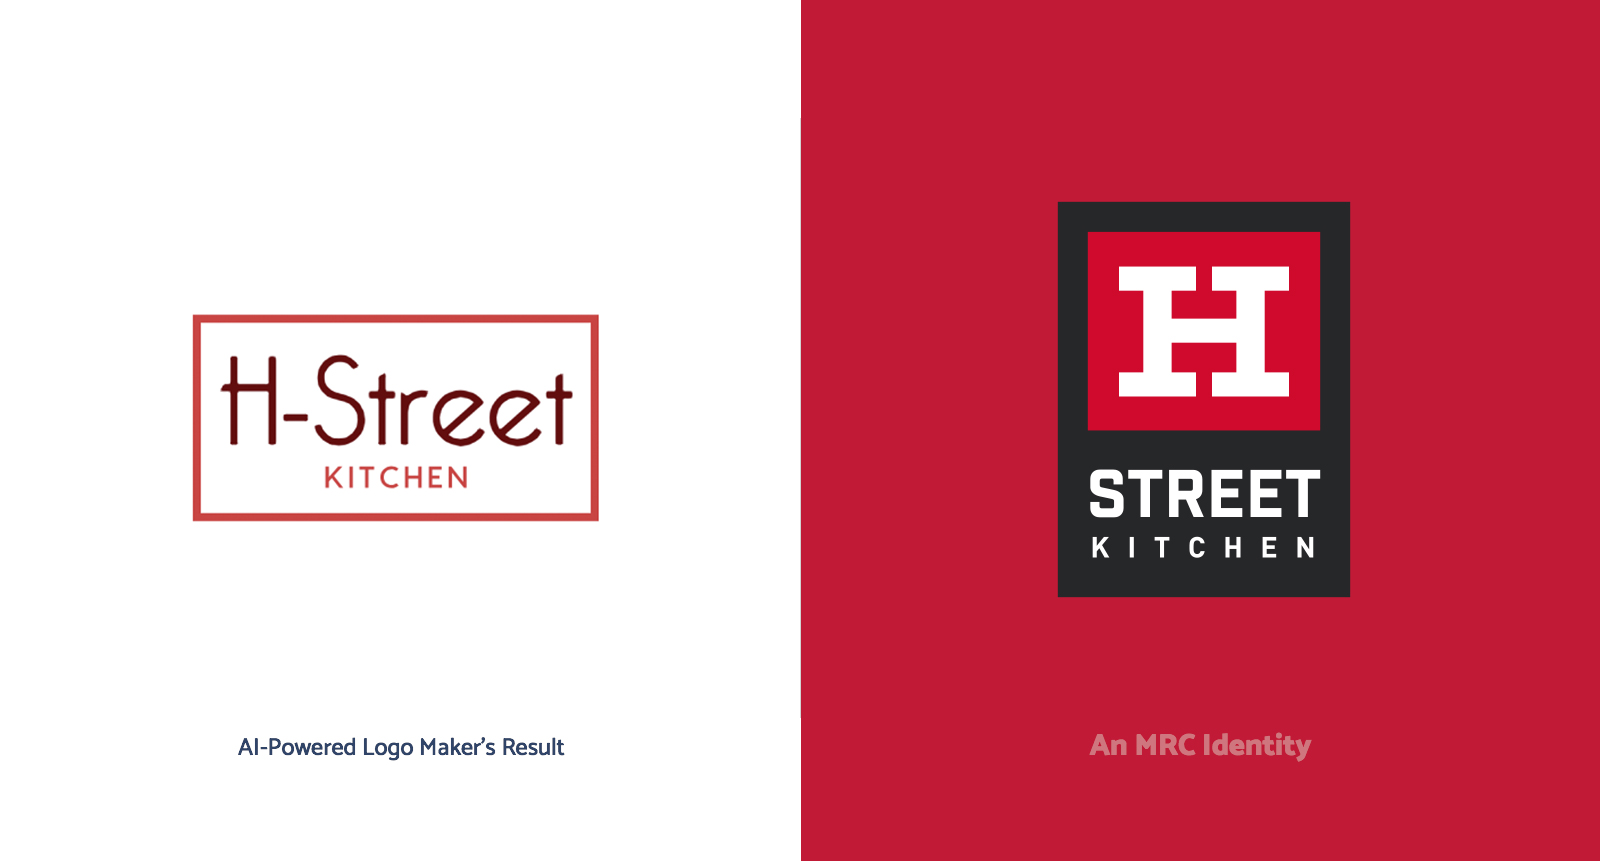 LogoJoy versus MRC Raleigh in a Logo Design Content for H-Street Kitchen